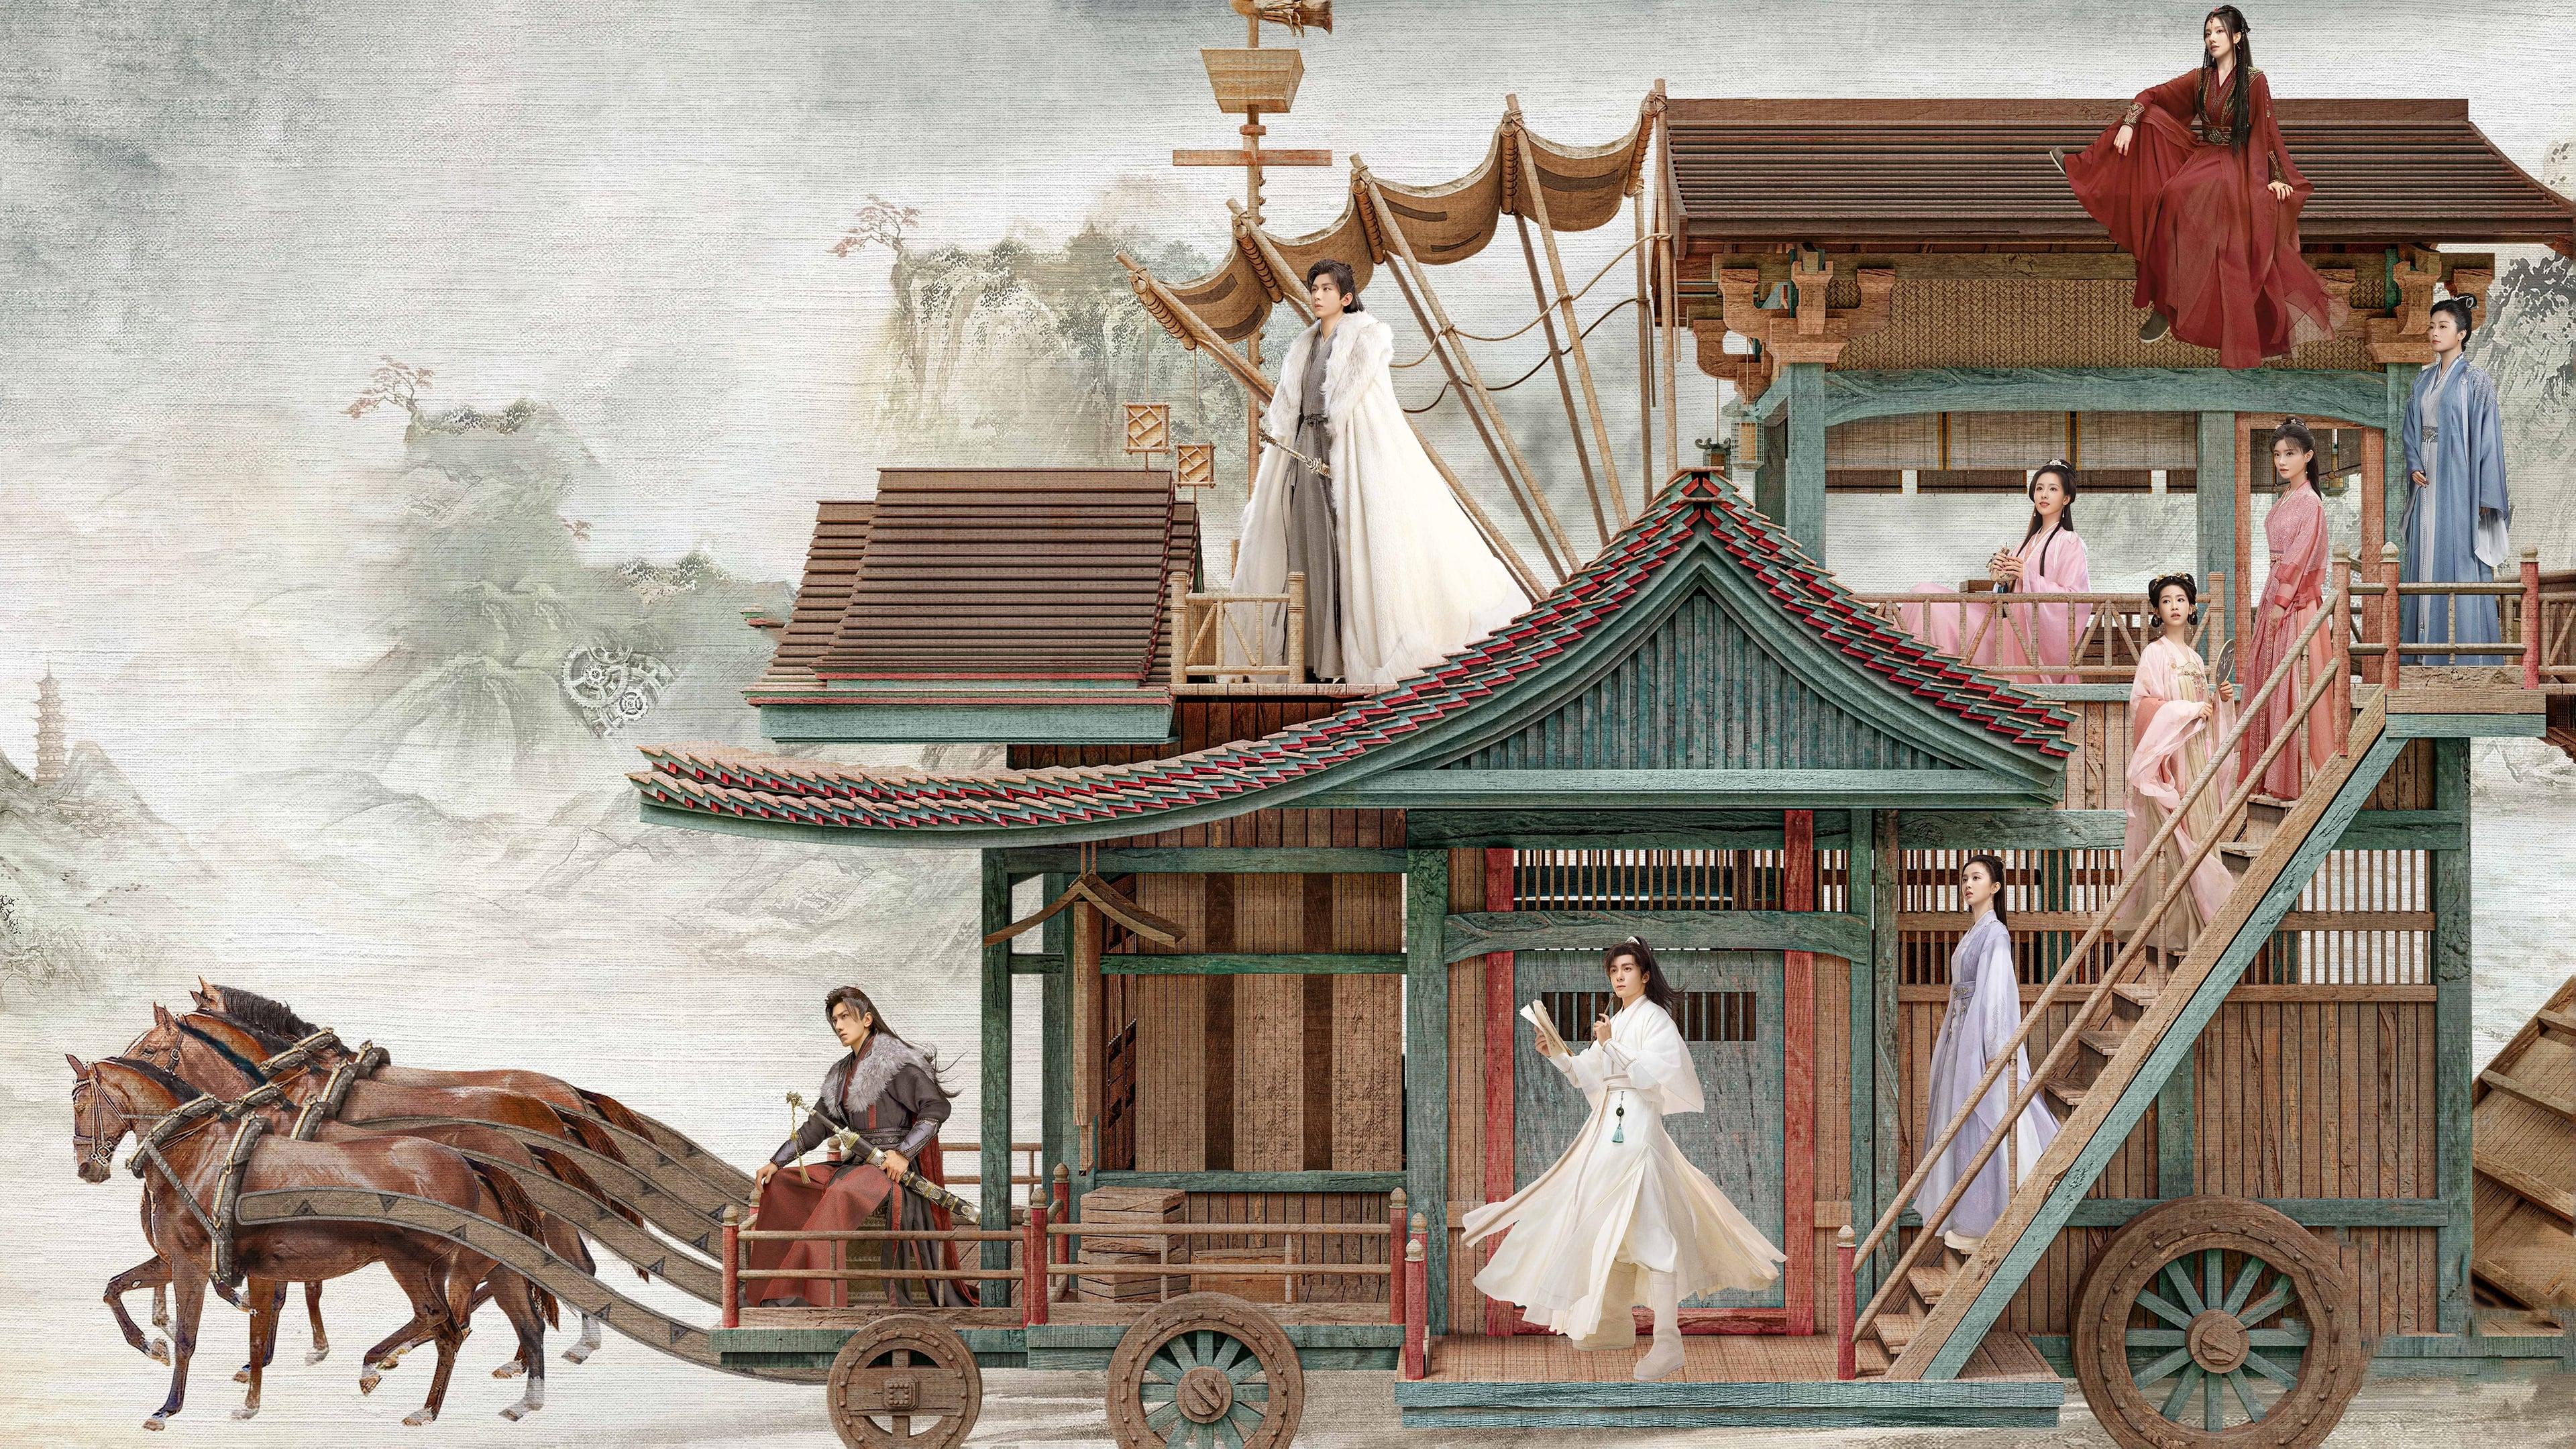 Moxi Zhang backdrop